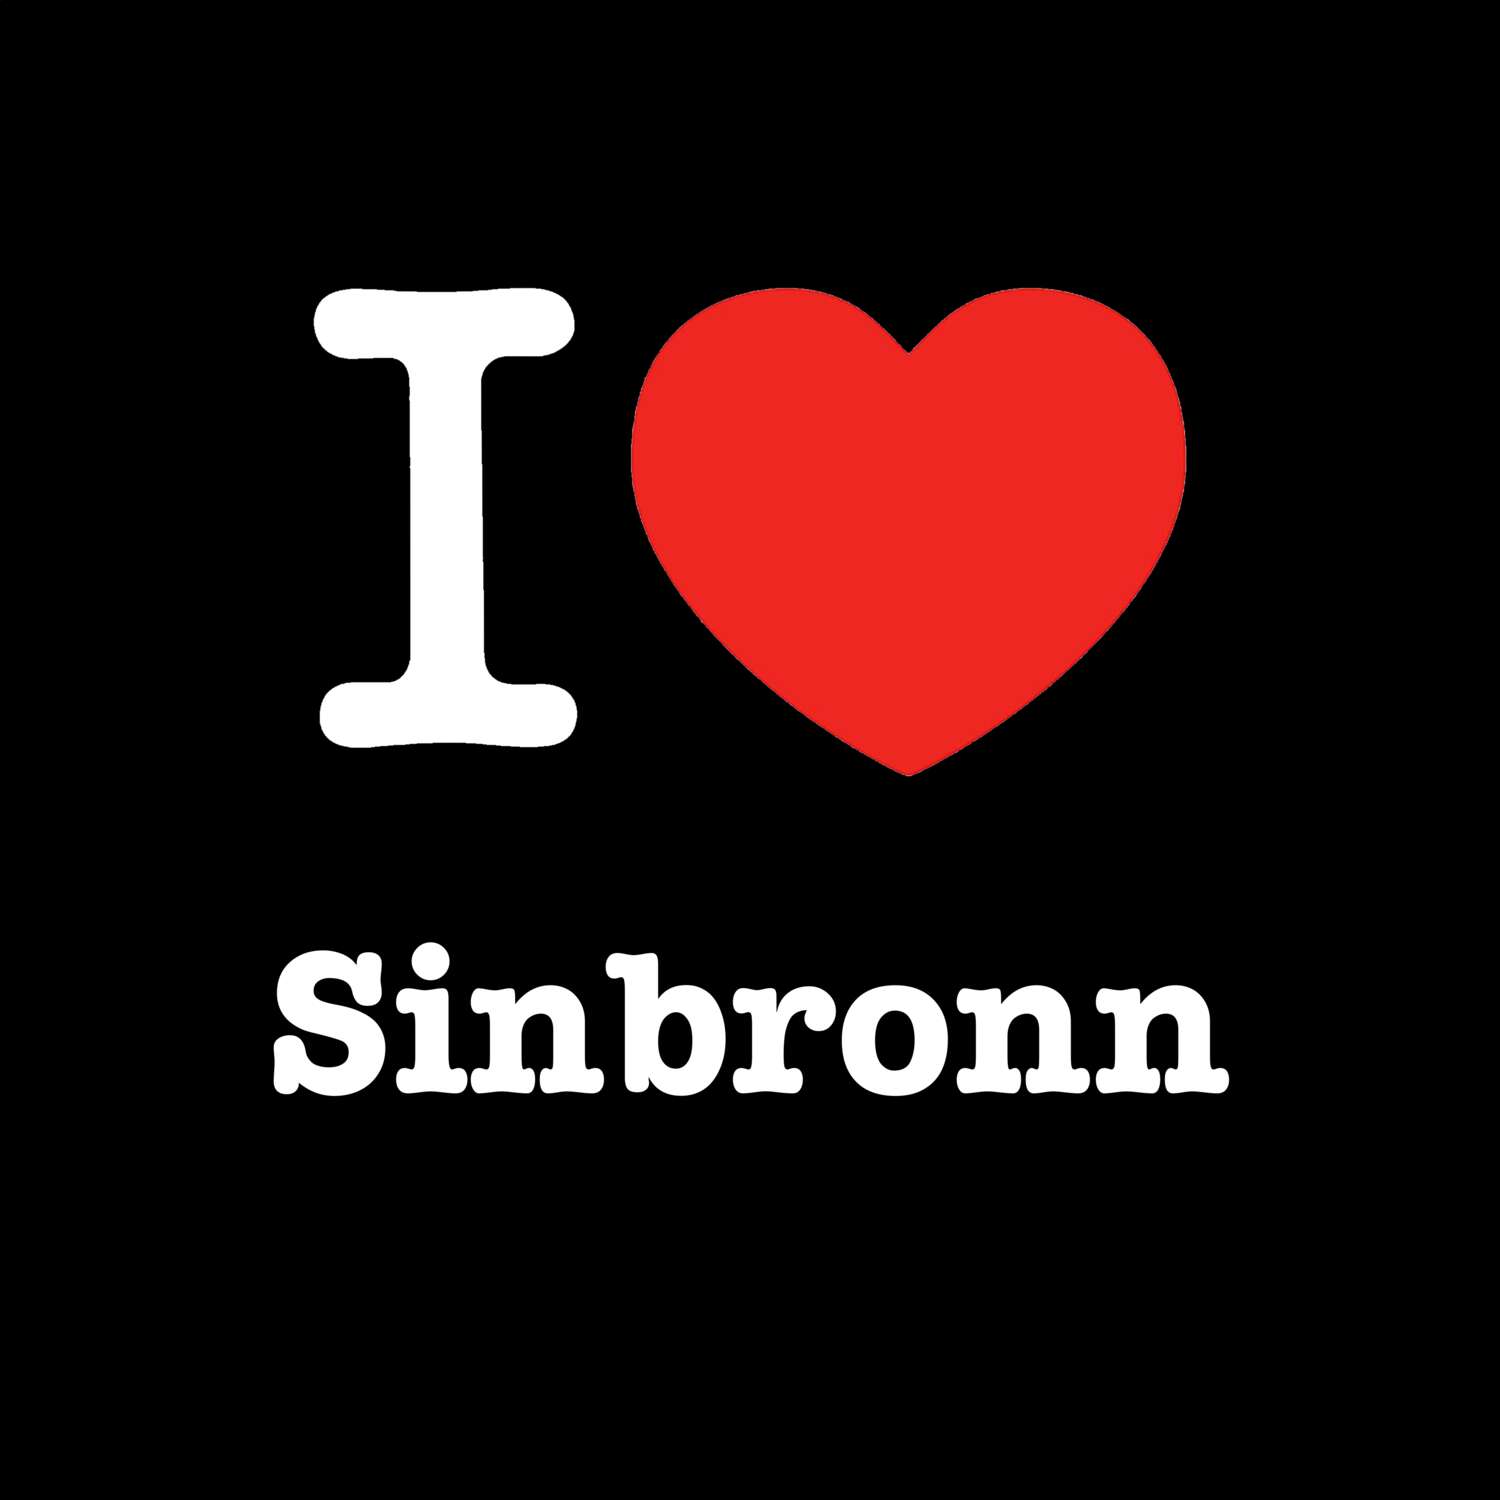 Sinbronn T-Shirt »I love«